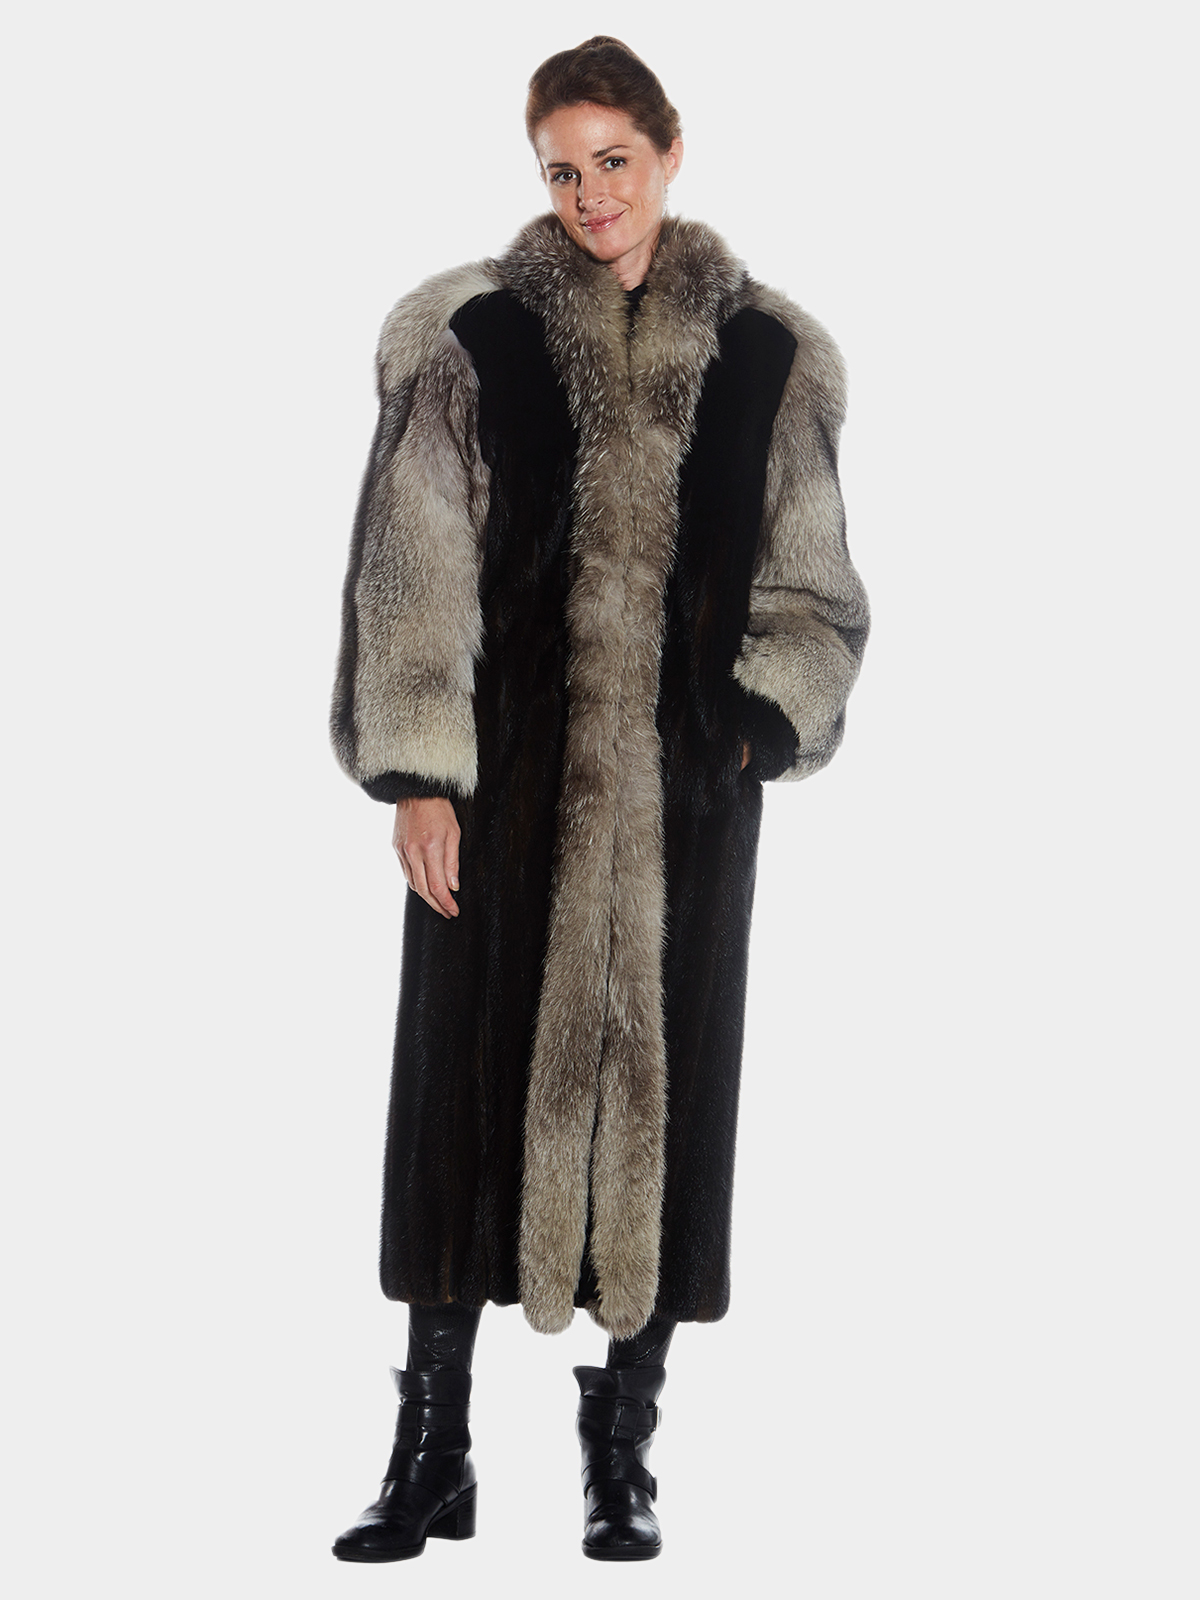 Ranch Mink Coat Black Fox Fur Tuxedo Trim Fronts #2112 – MARC KAUFMAN FURS